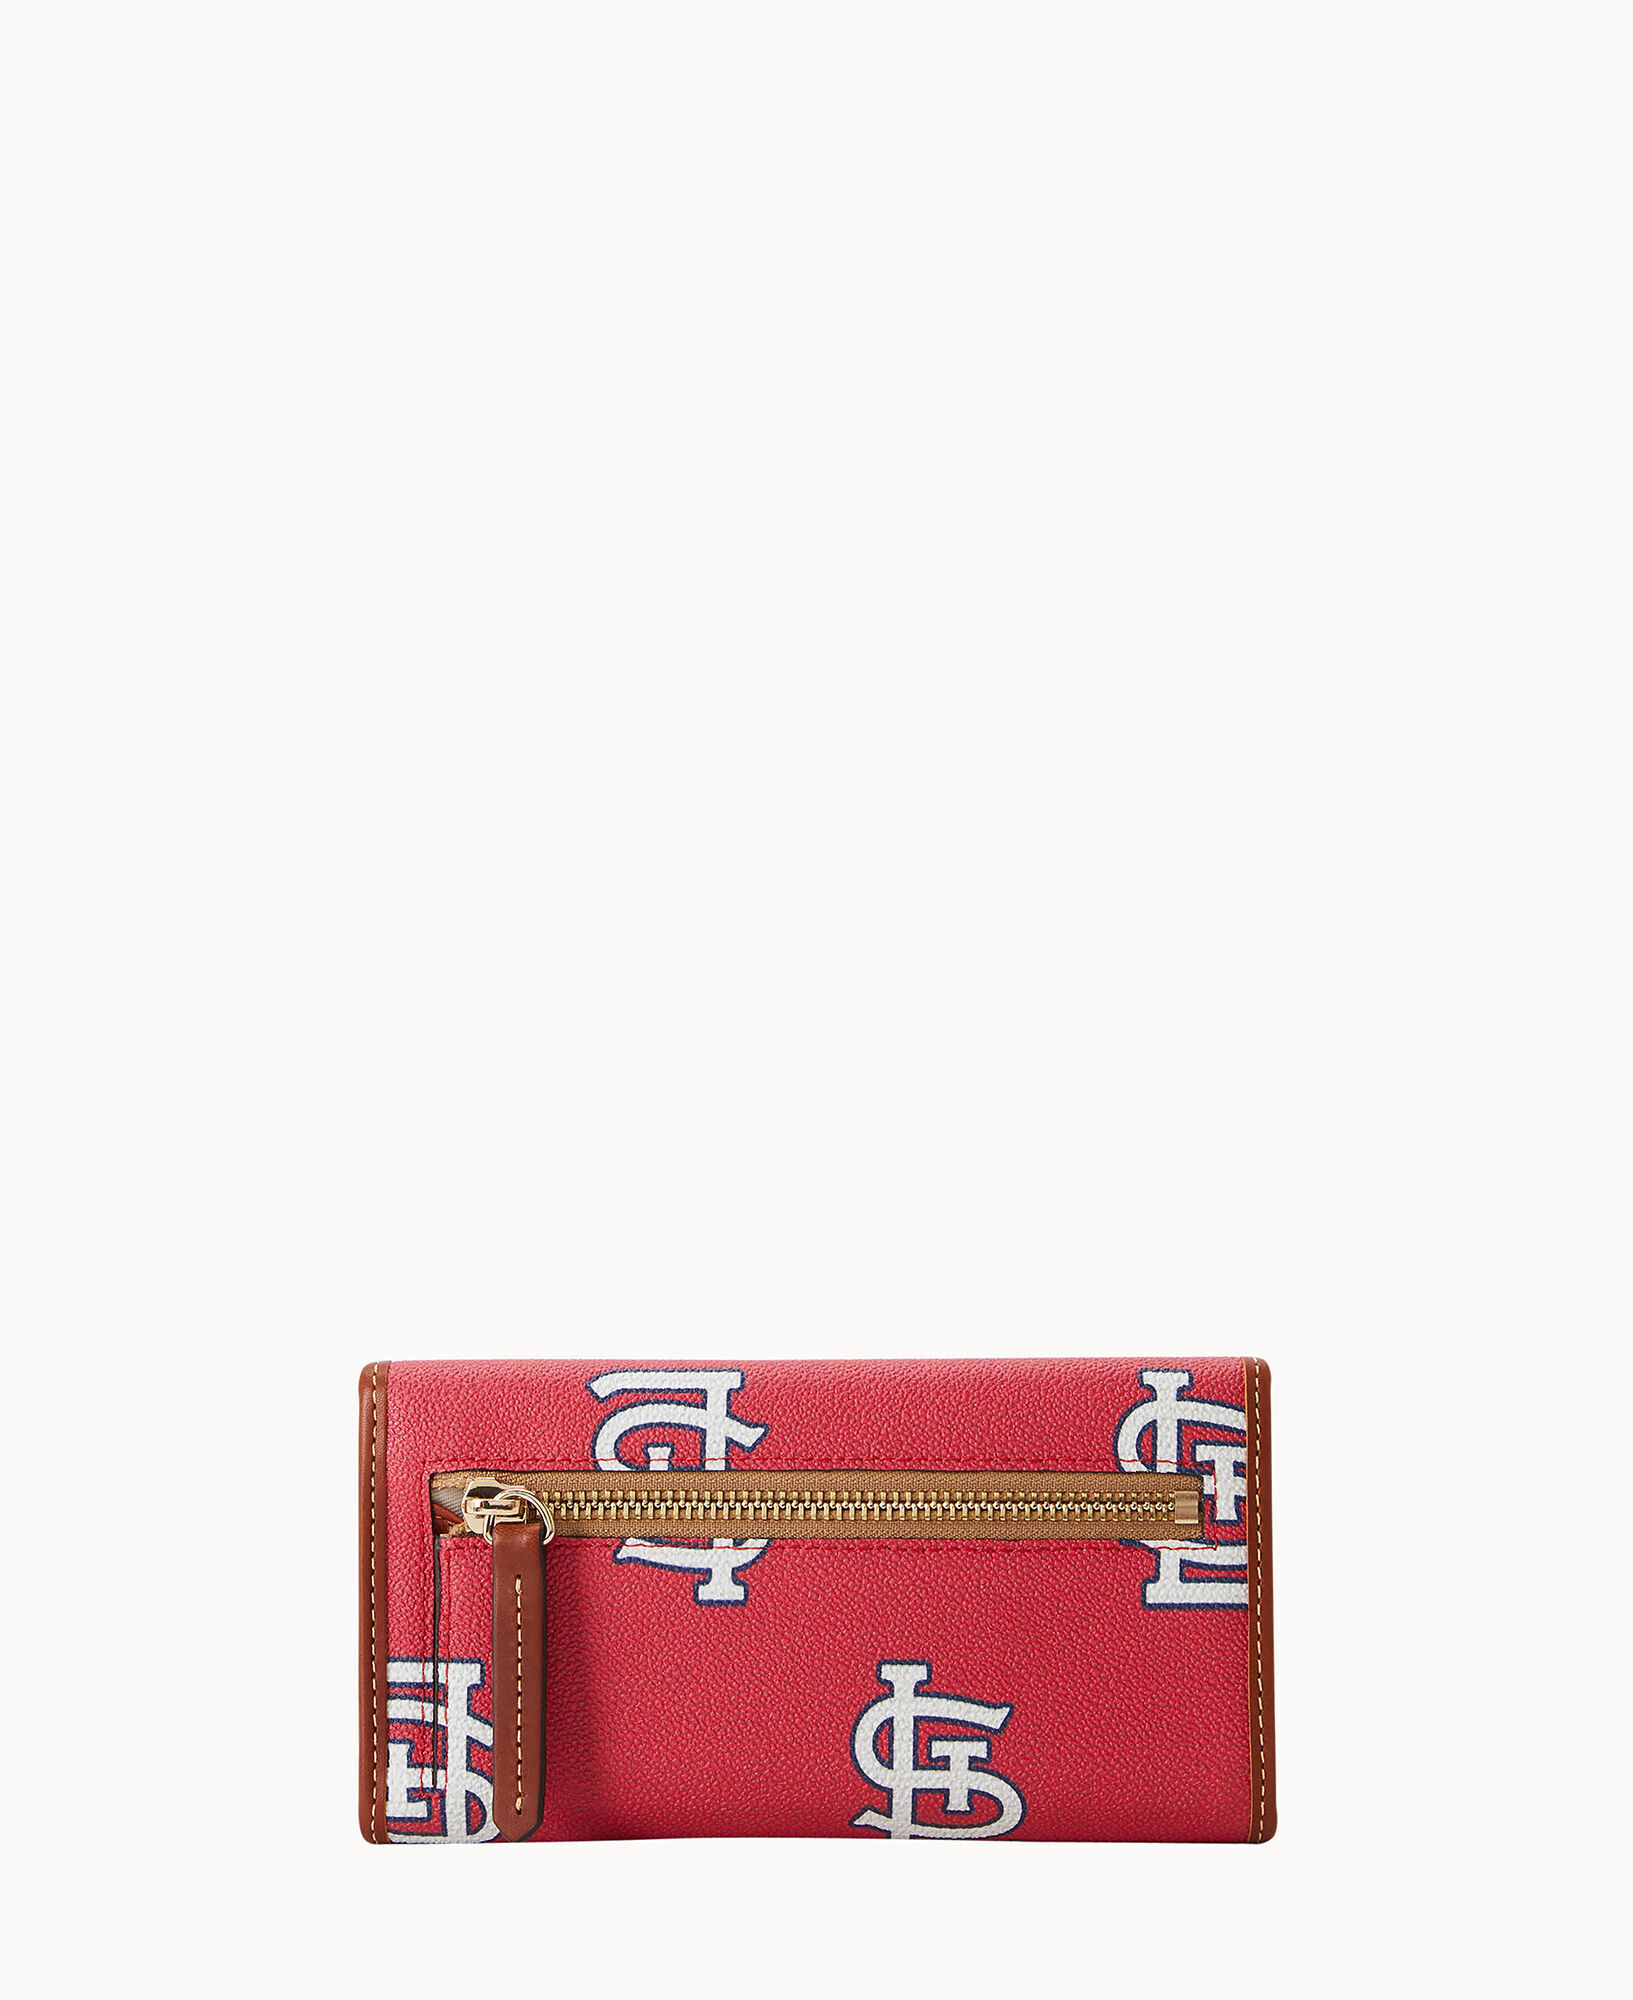 St. Louis Cardinals Dooney & Bourke Sporty Monogram Continental Clutch